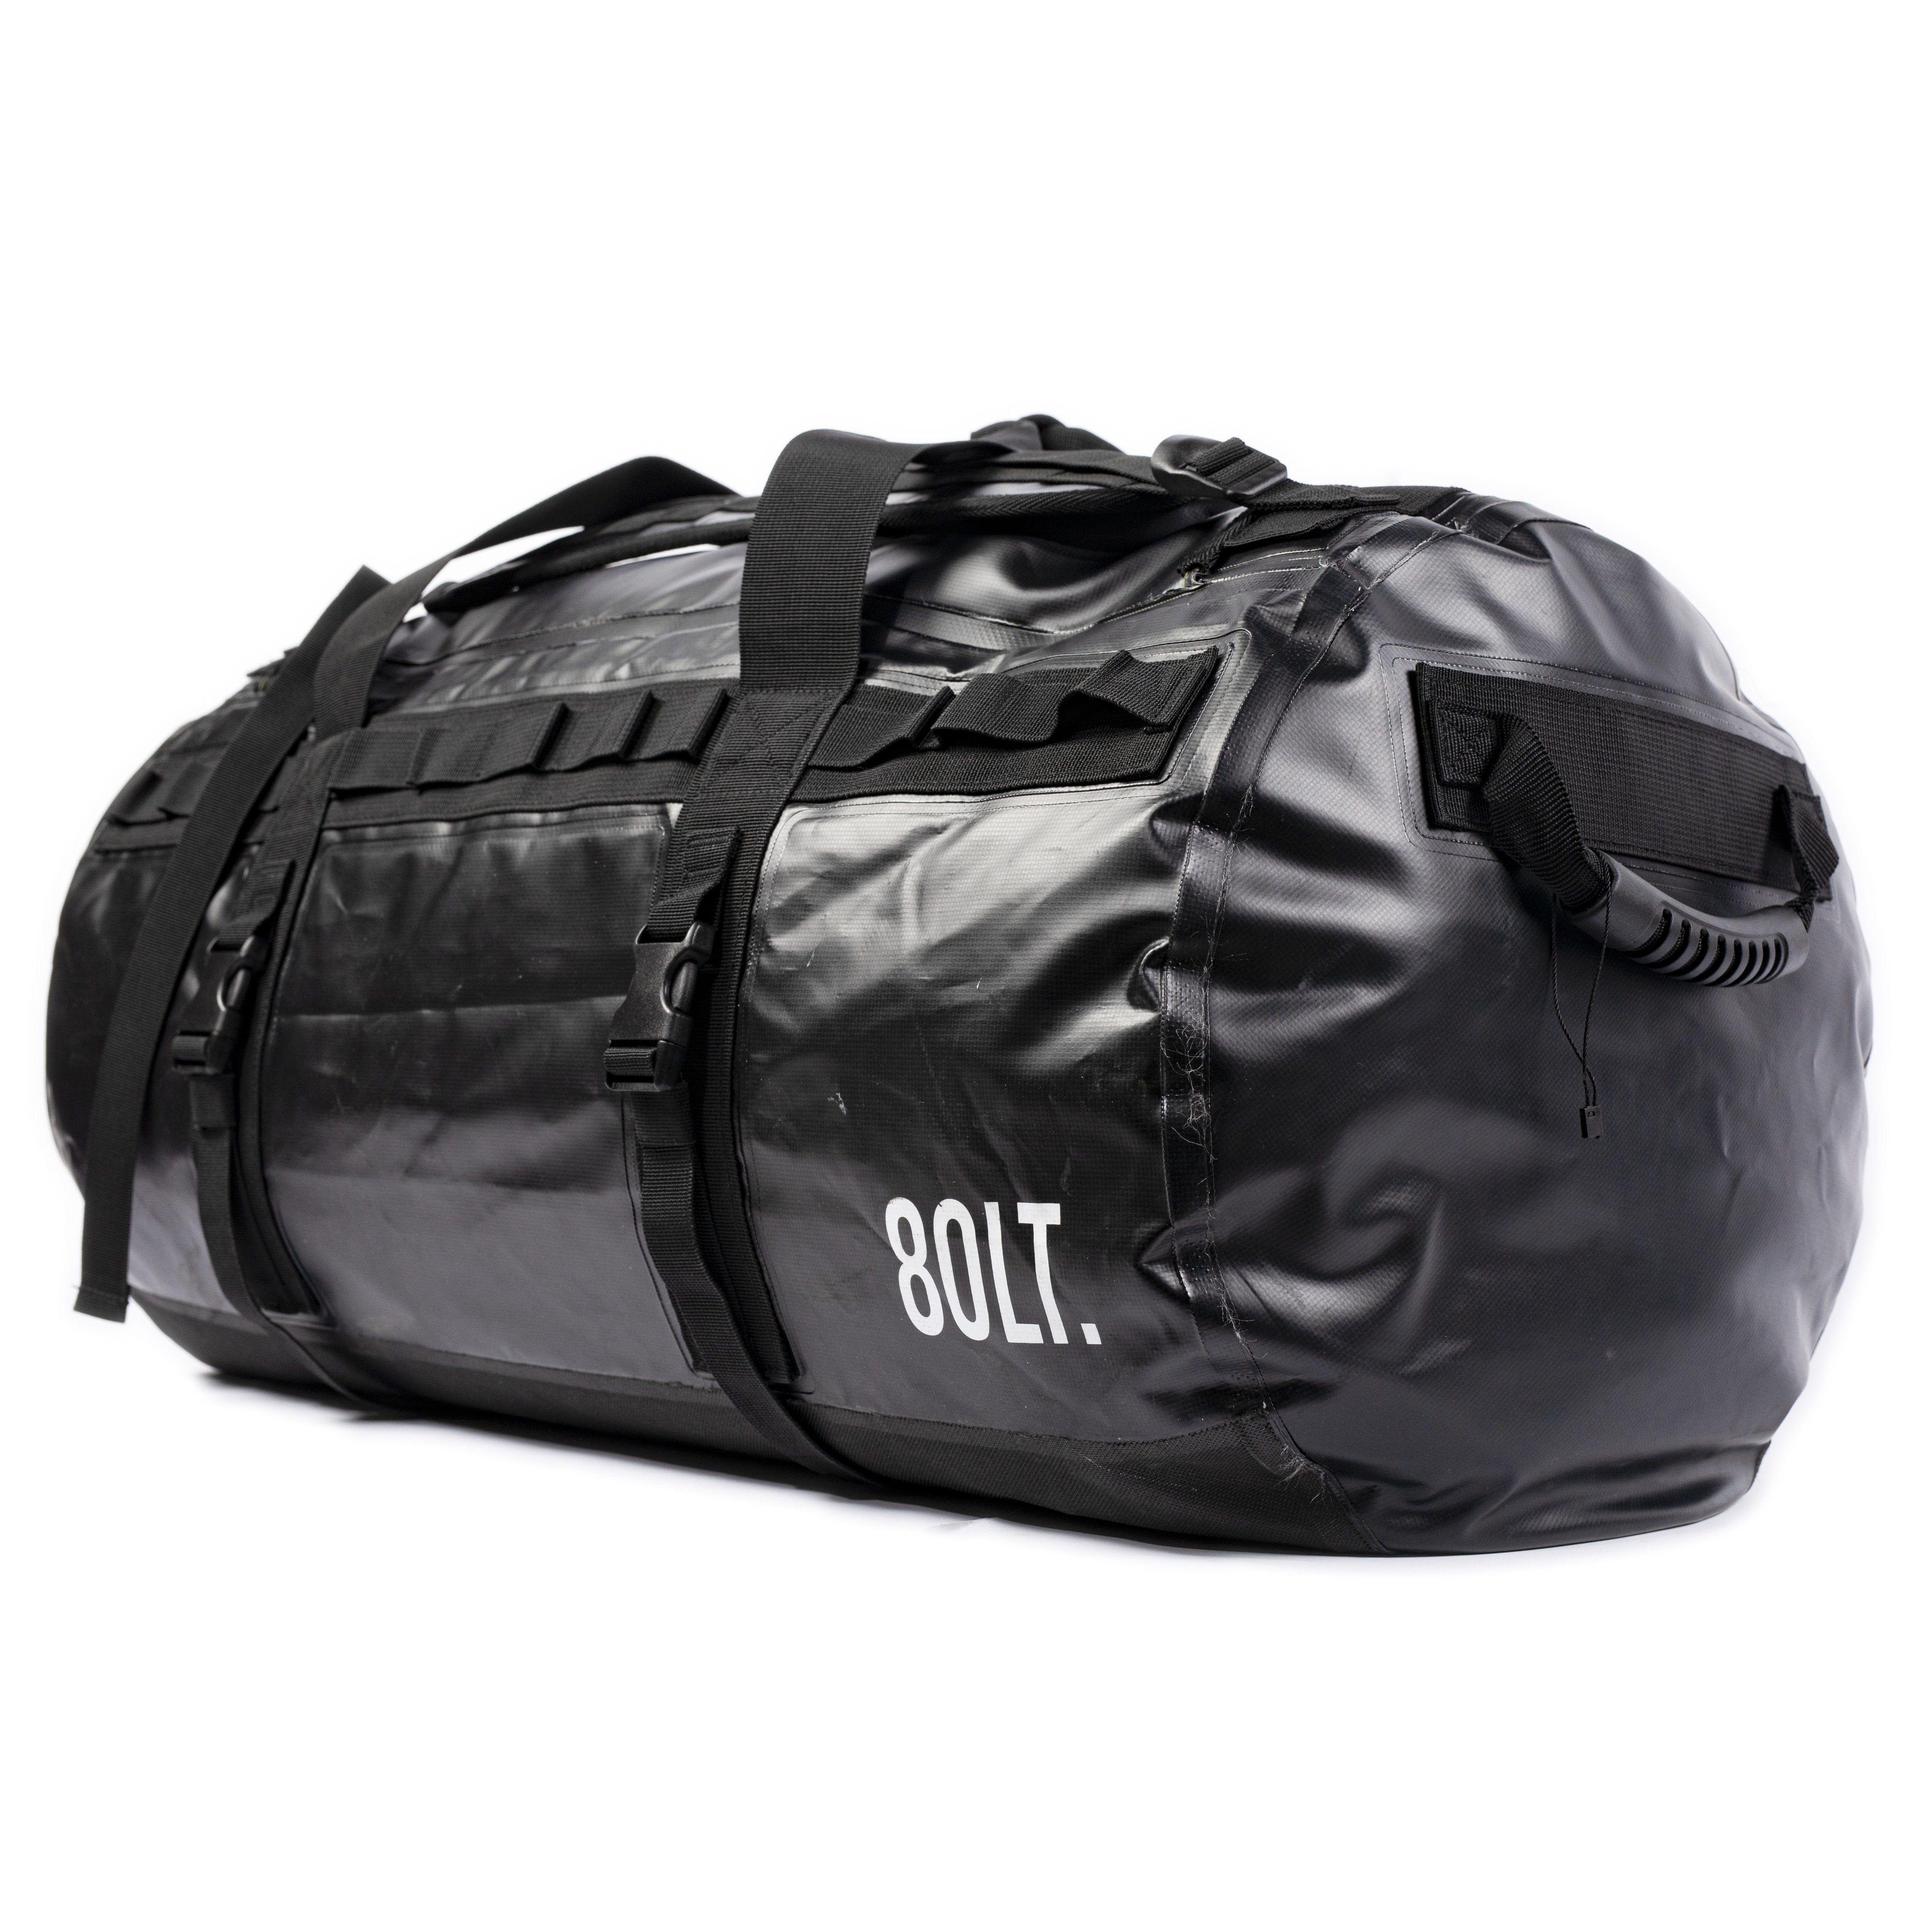 Compra Bolsa Estanca Safe 20L Negra - Dry Bag al Mejor precio online.